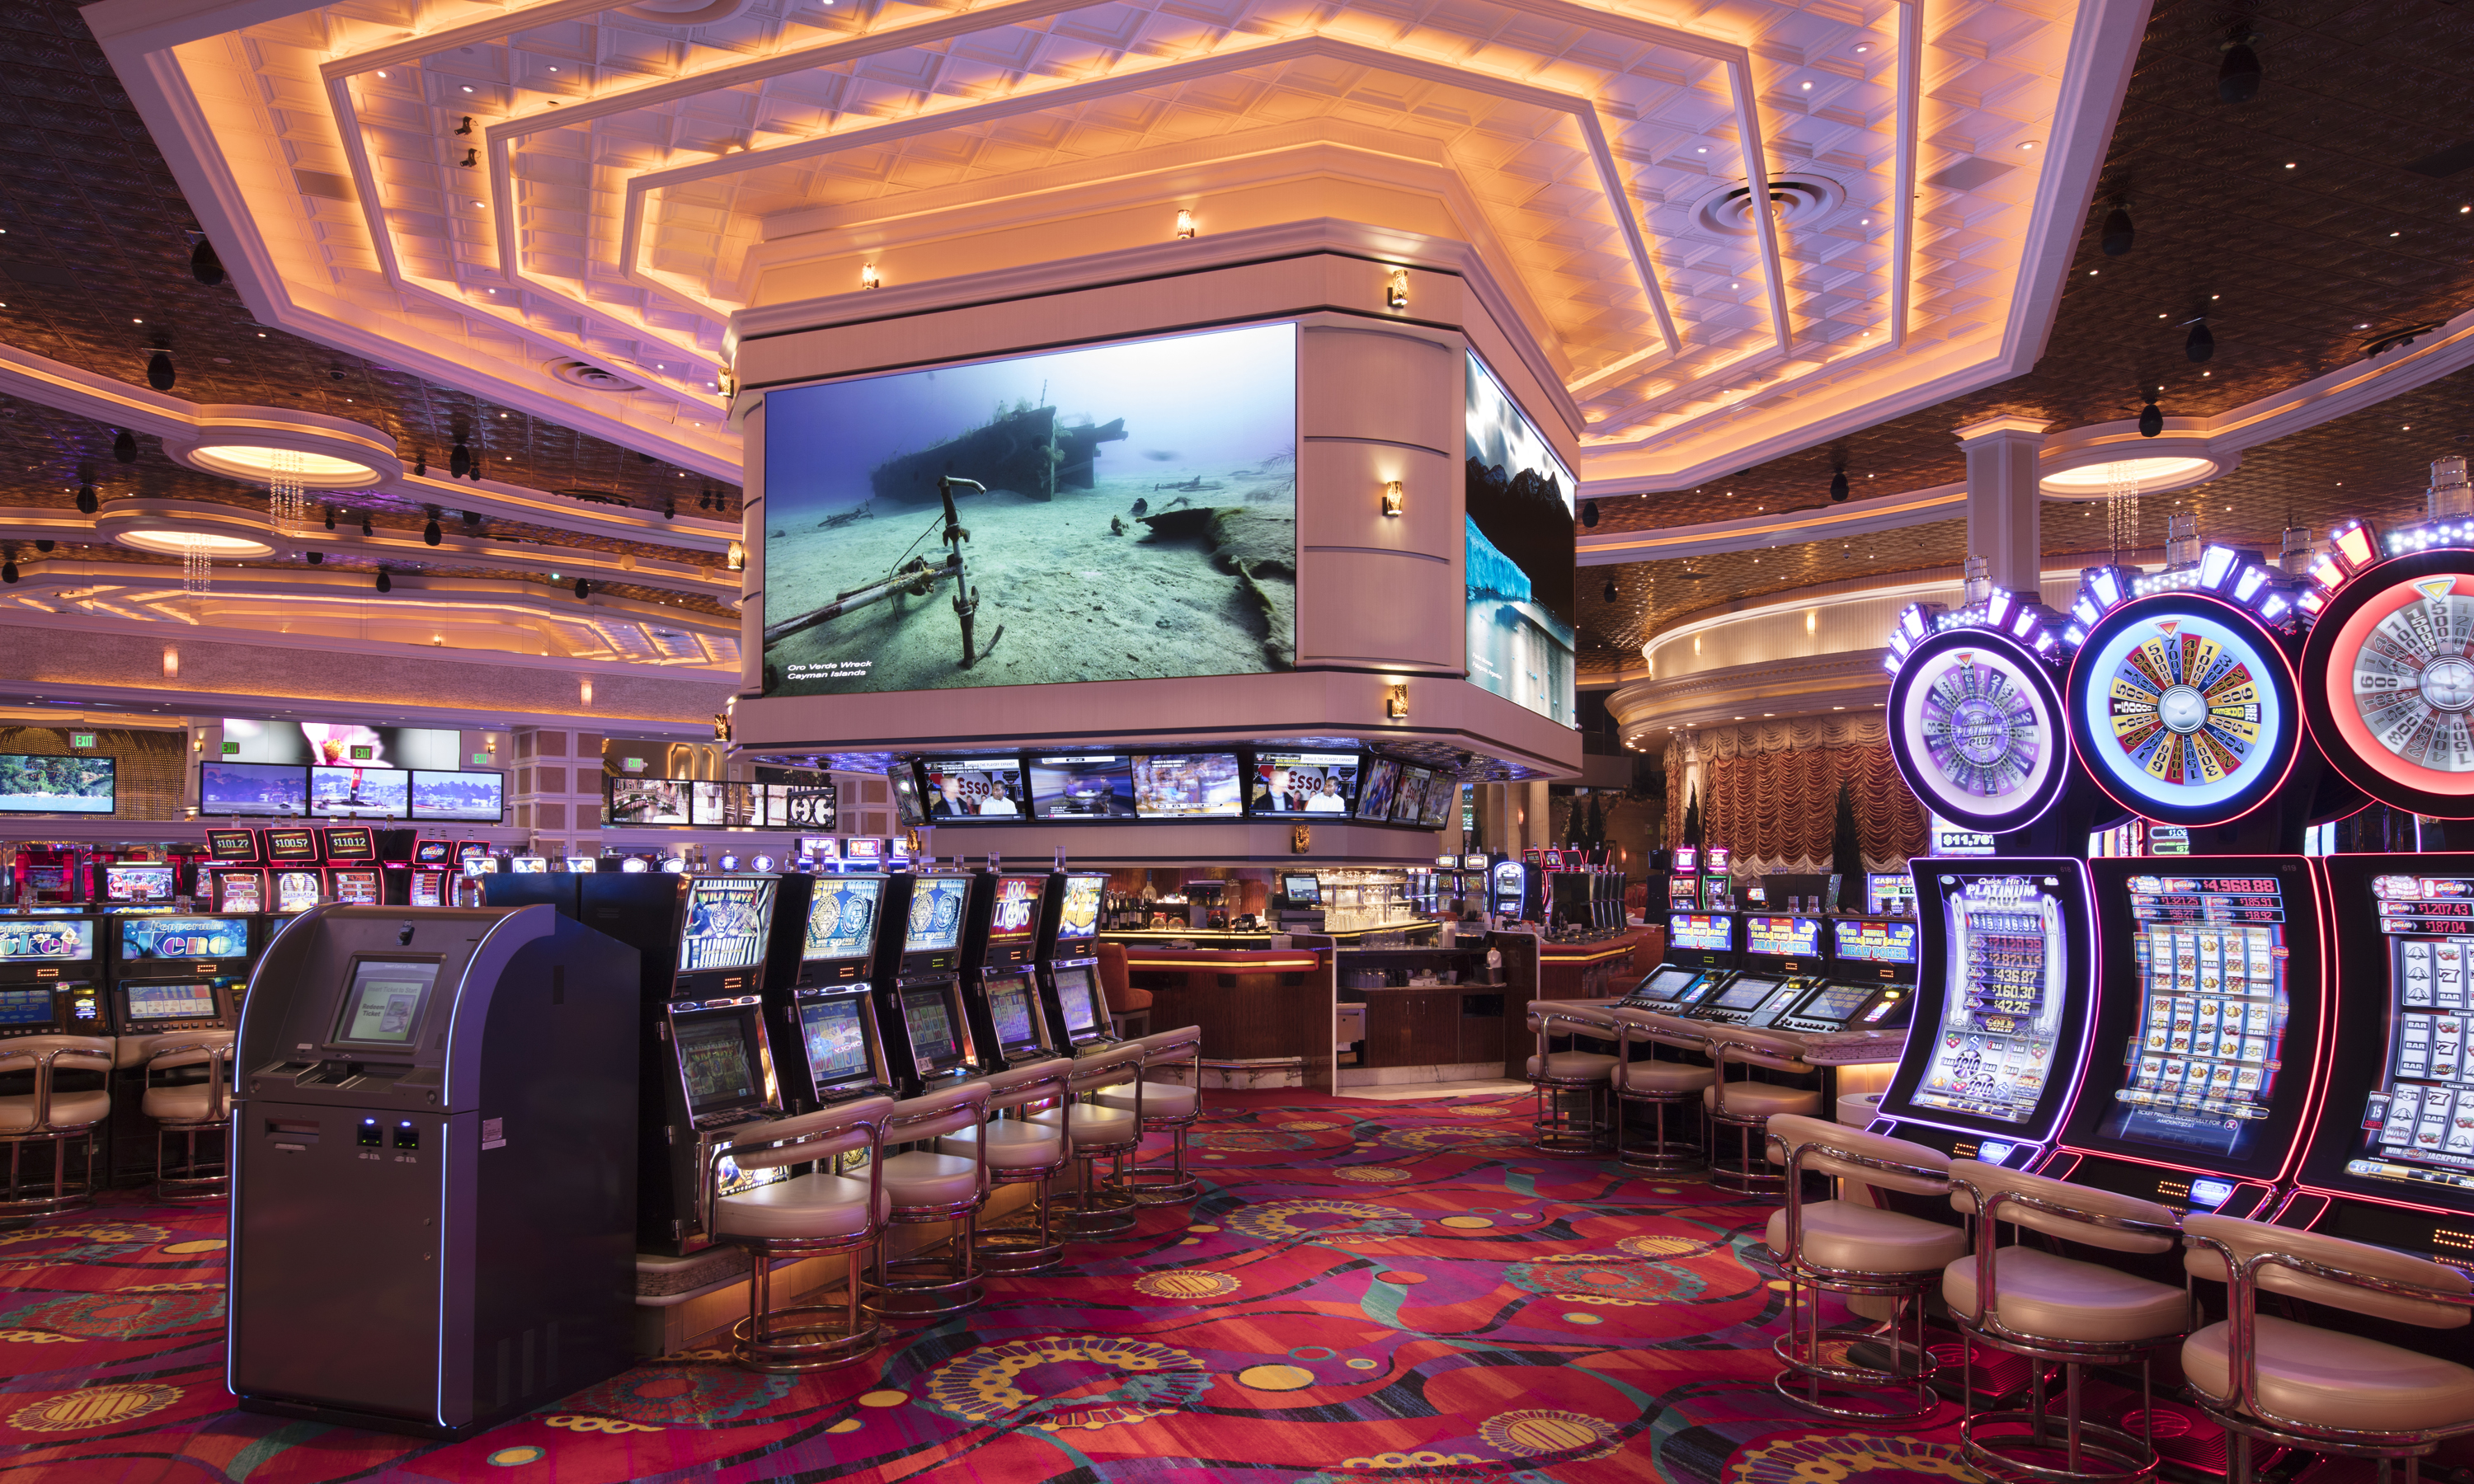 play online casino slots